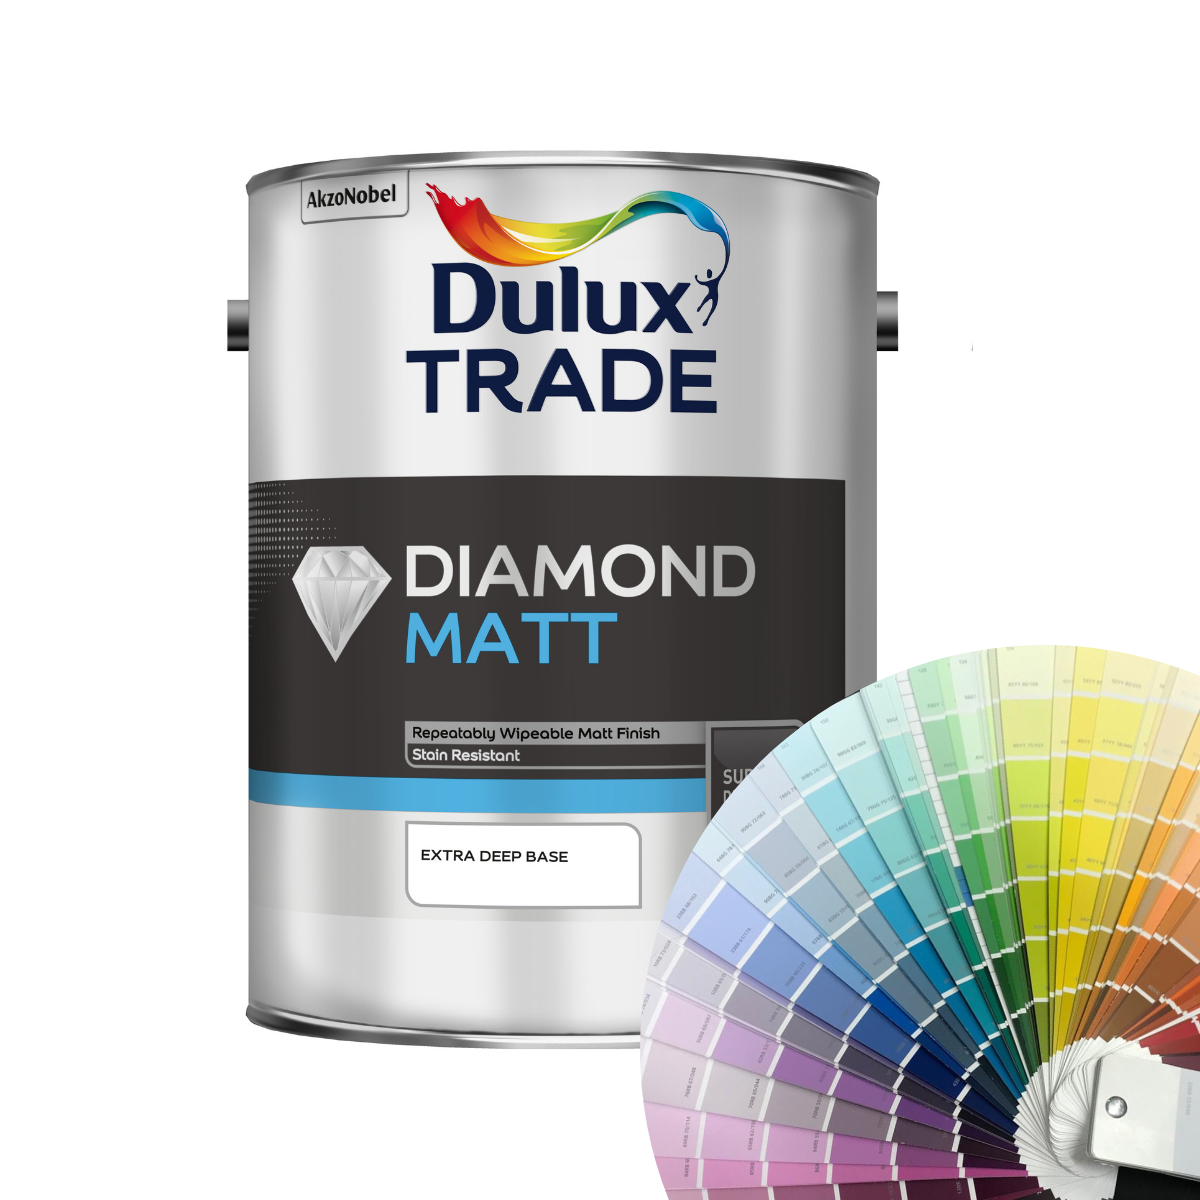 Dulux Trade Diamond Matt - Tinted Colour